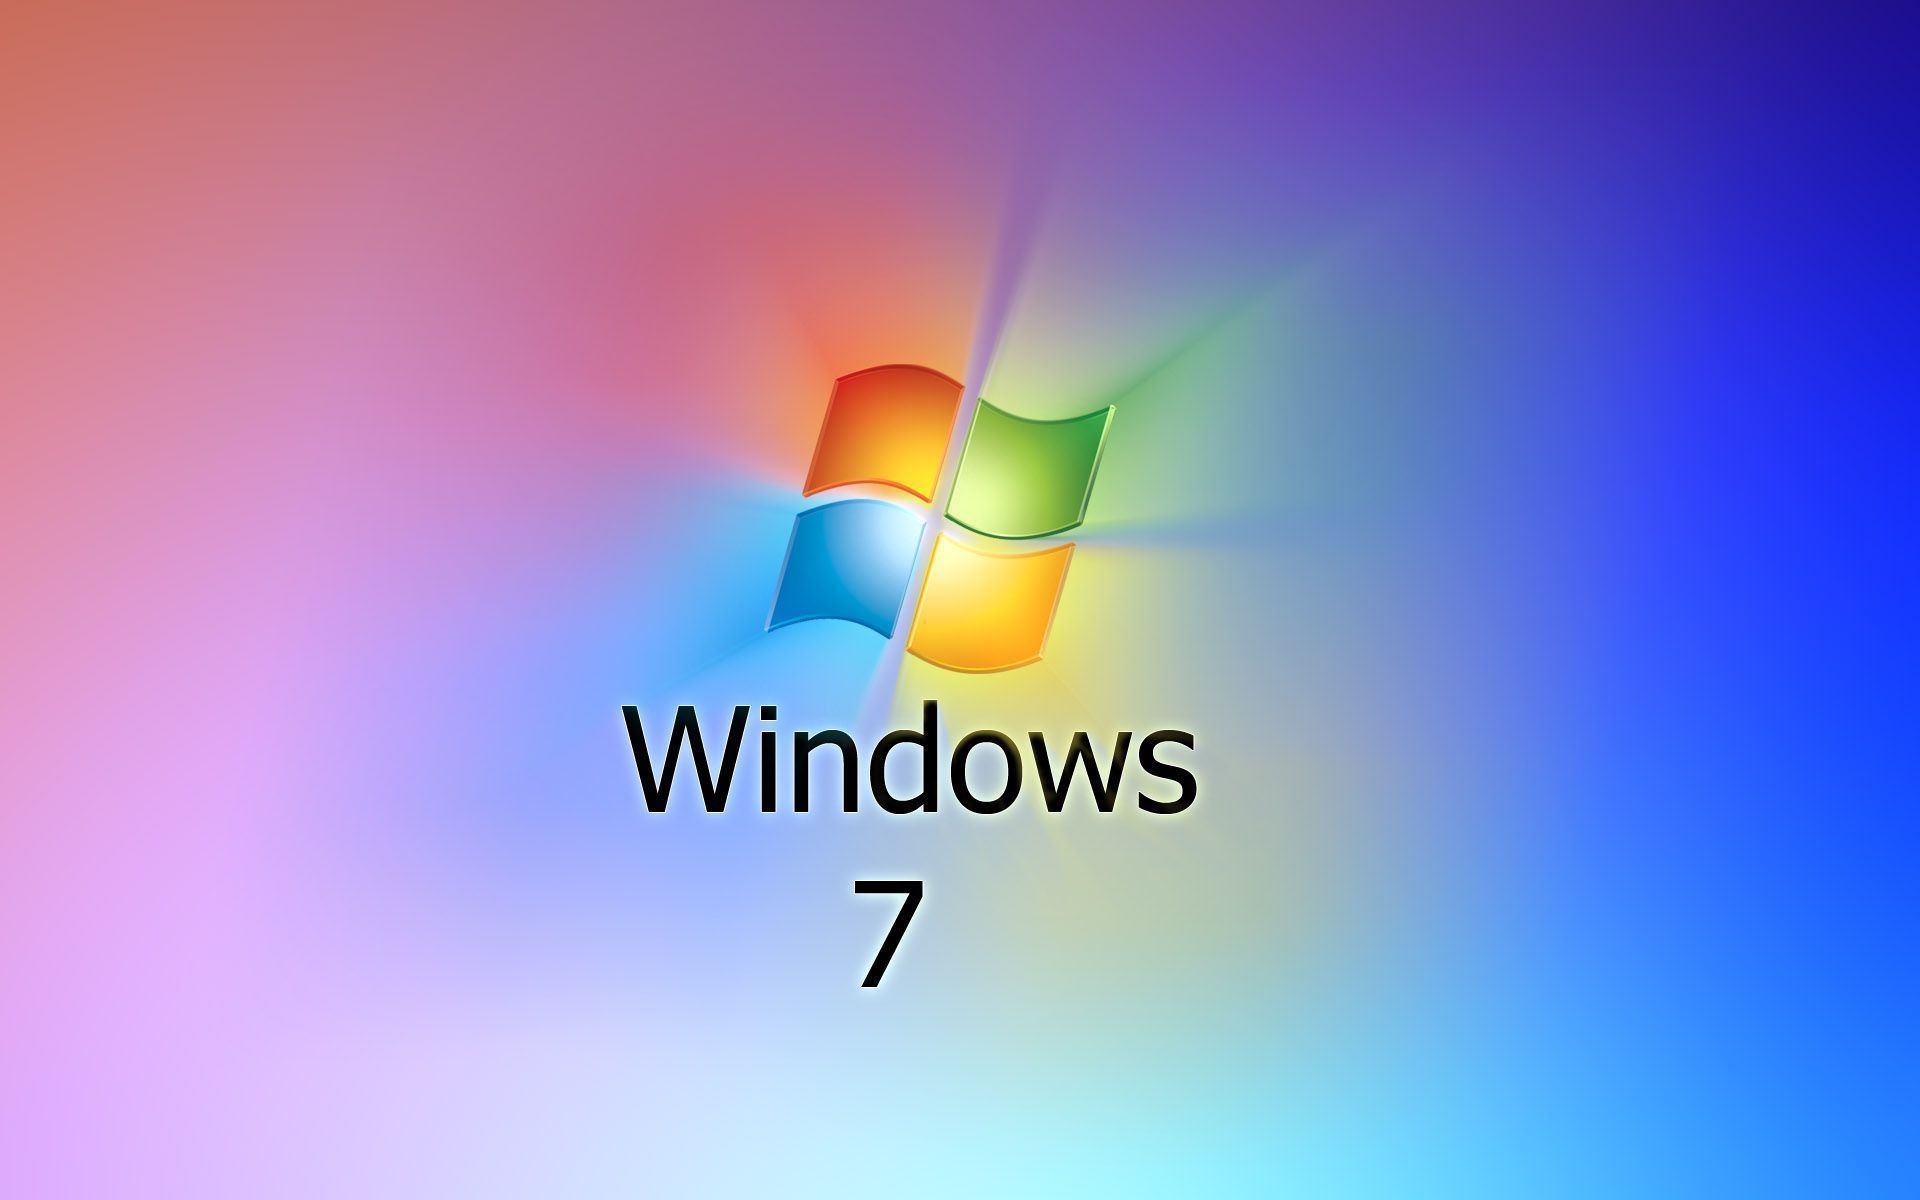 Windows 7 ultimate wallpaper hd 3d for desktop